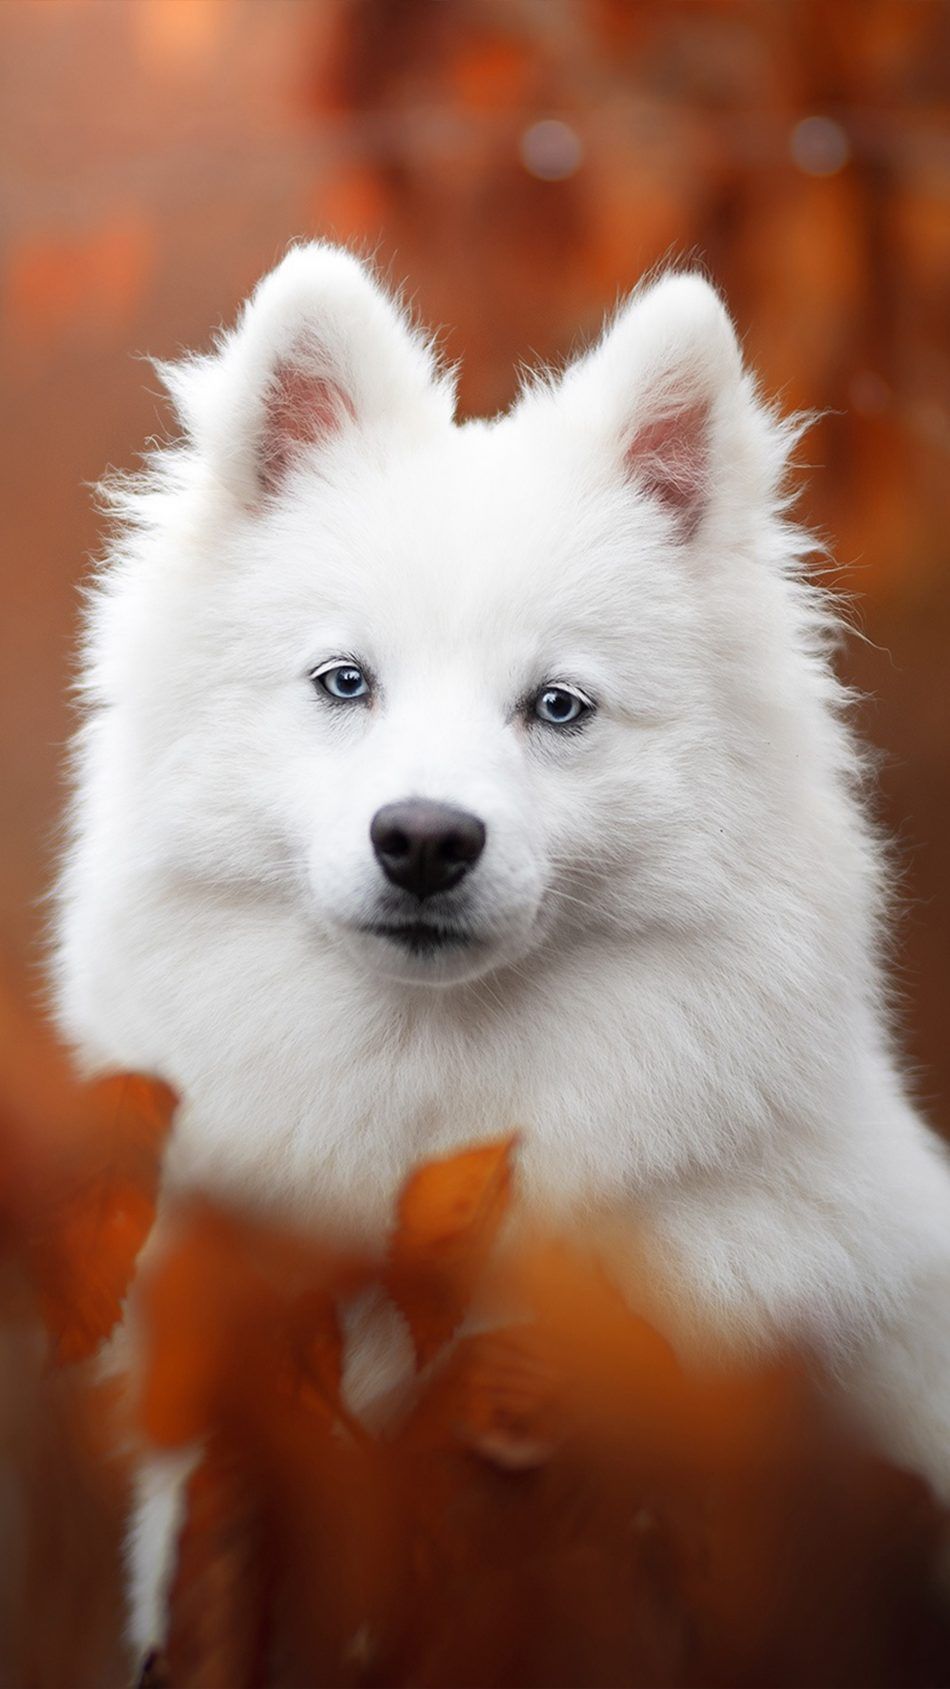 Spitz Pet Dog 4K Ultra HD Mobile Wallpaper. Cute baby animals, Cute animals, Baby animals